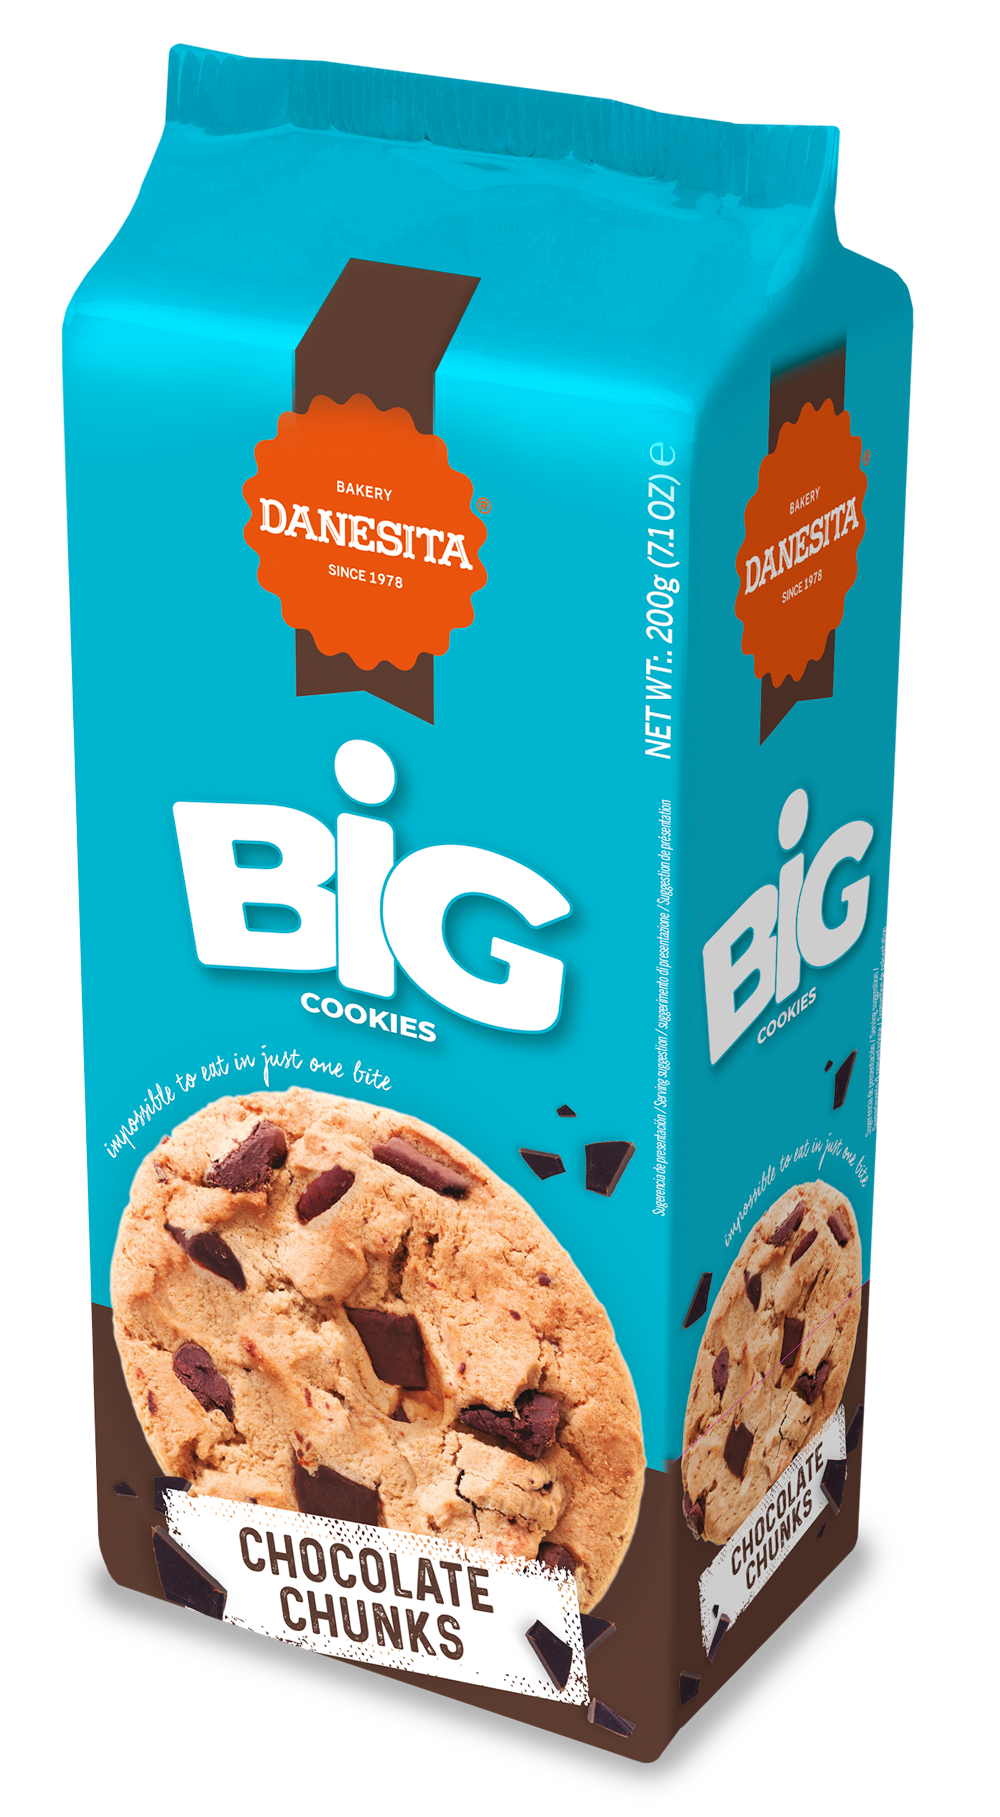 Big Cookies – Image